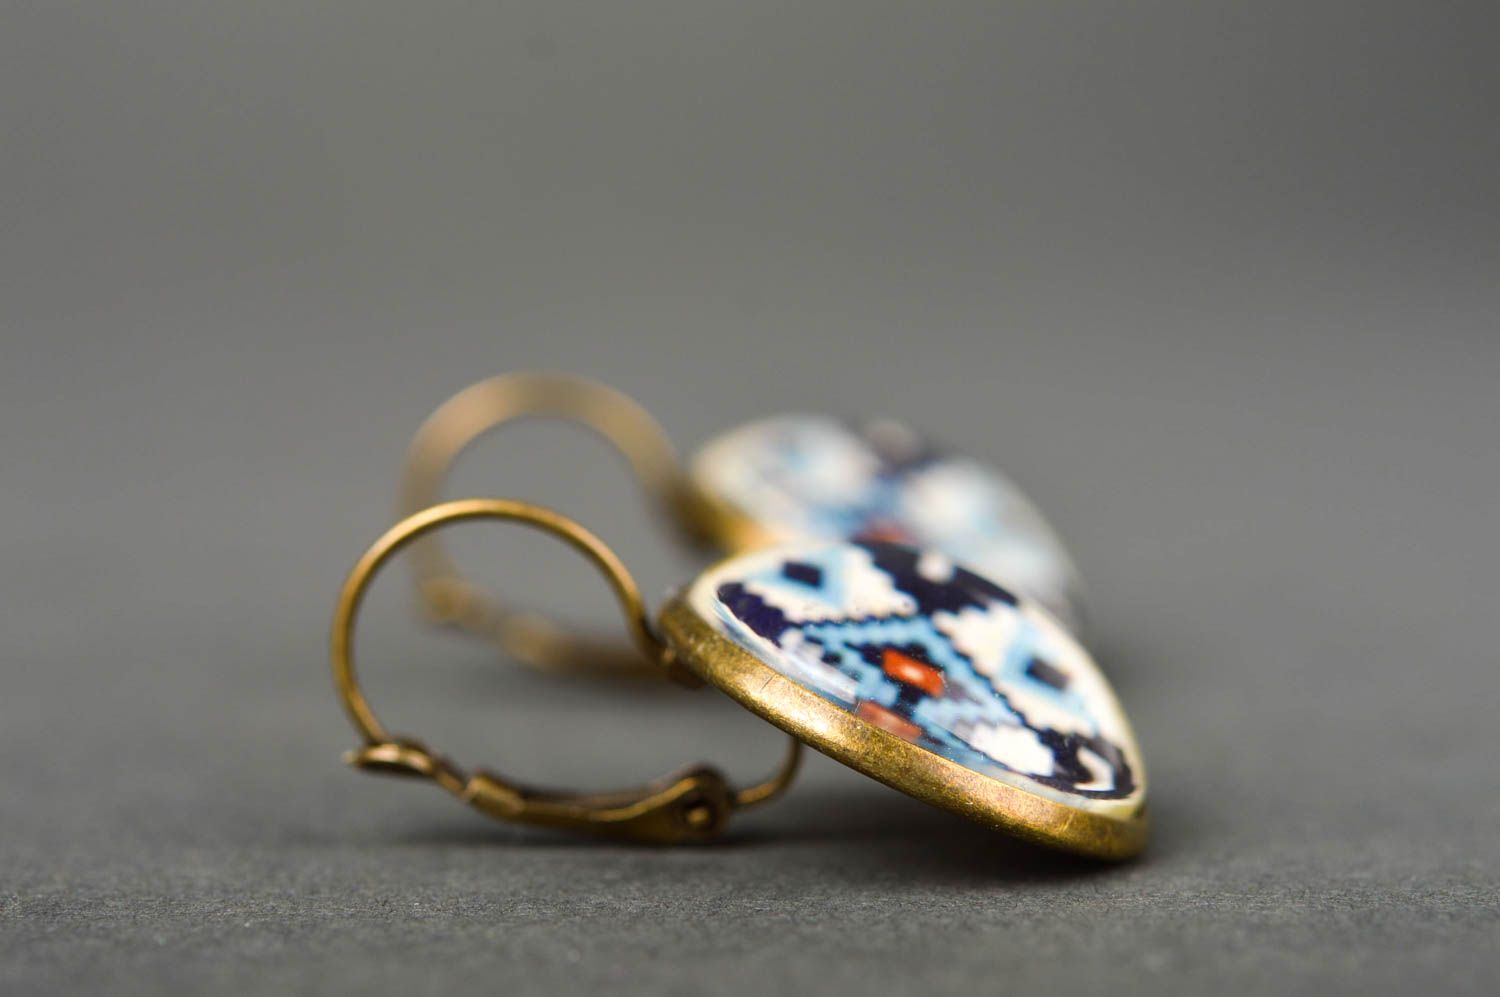 Handmade cabochon earrings designer earrings vintage earrings with charms photo 3